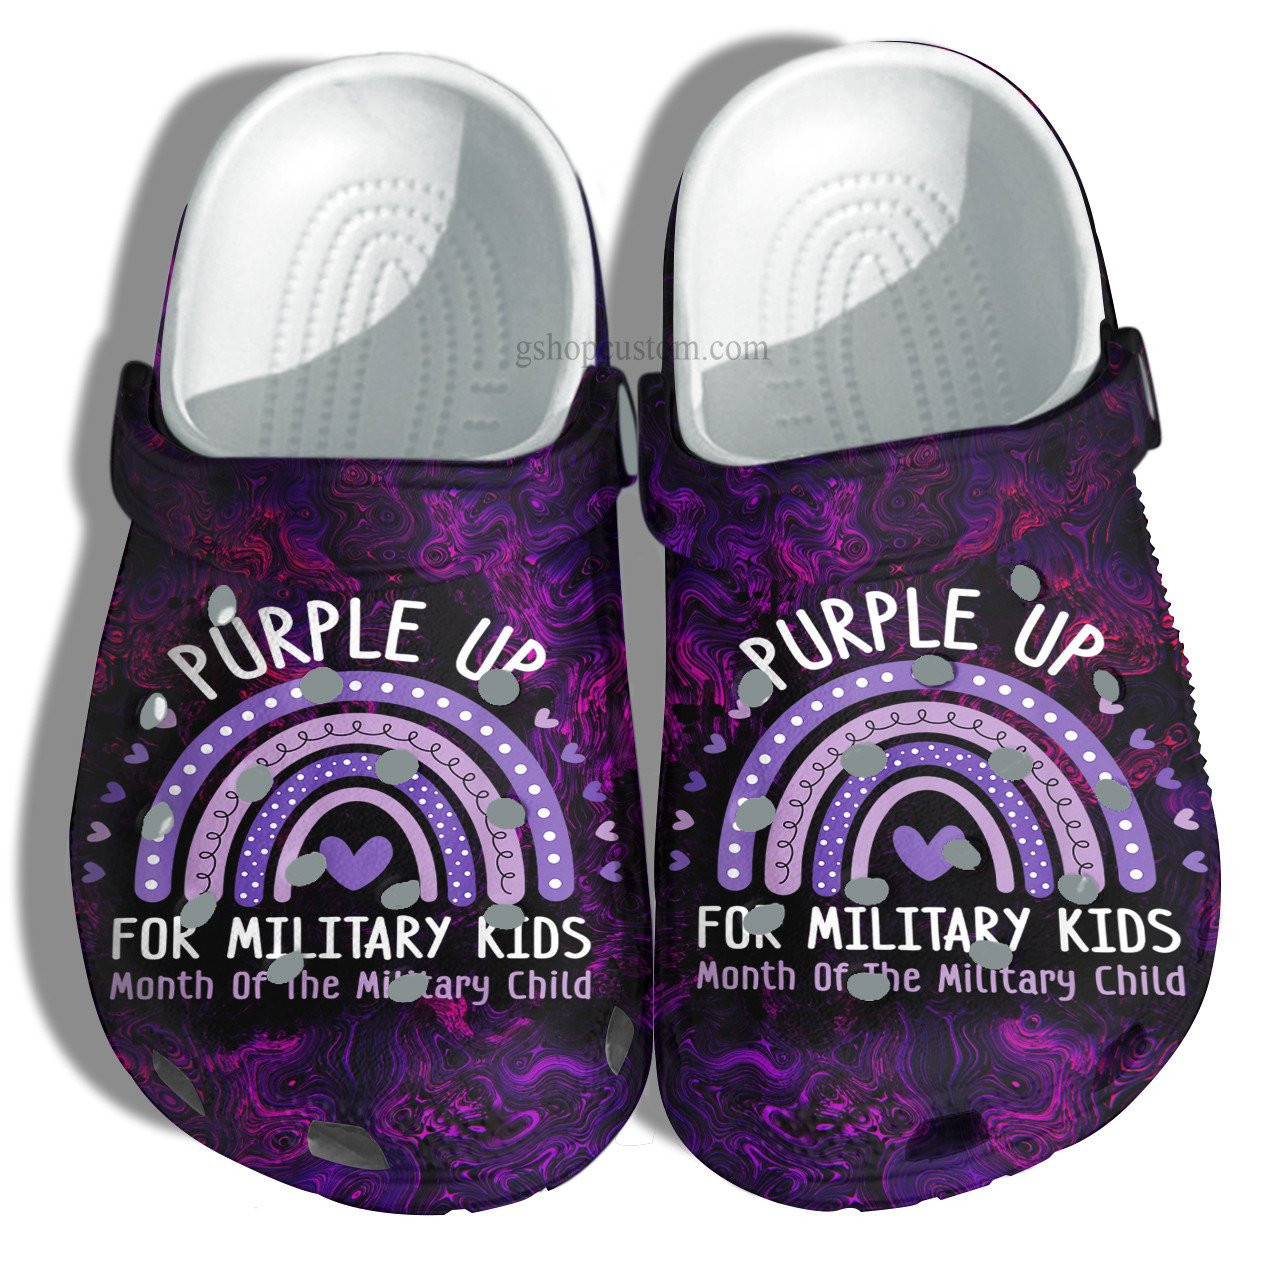 Rainbow Purple Up For Military Kids Crocs Shoes For Son Daughter - Purple Rainbow Military Kid Shoes Croc Clogs